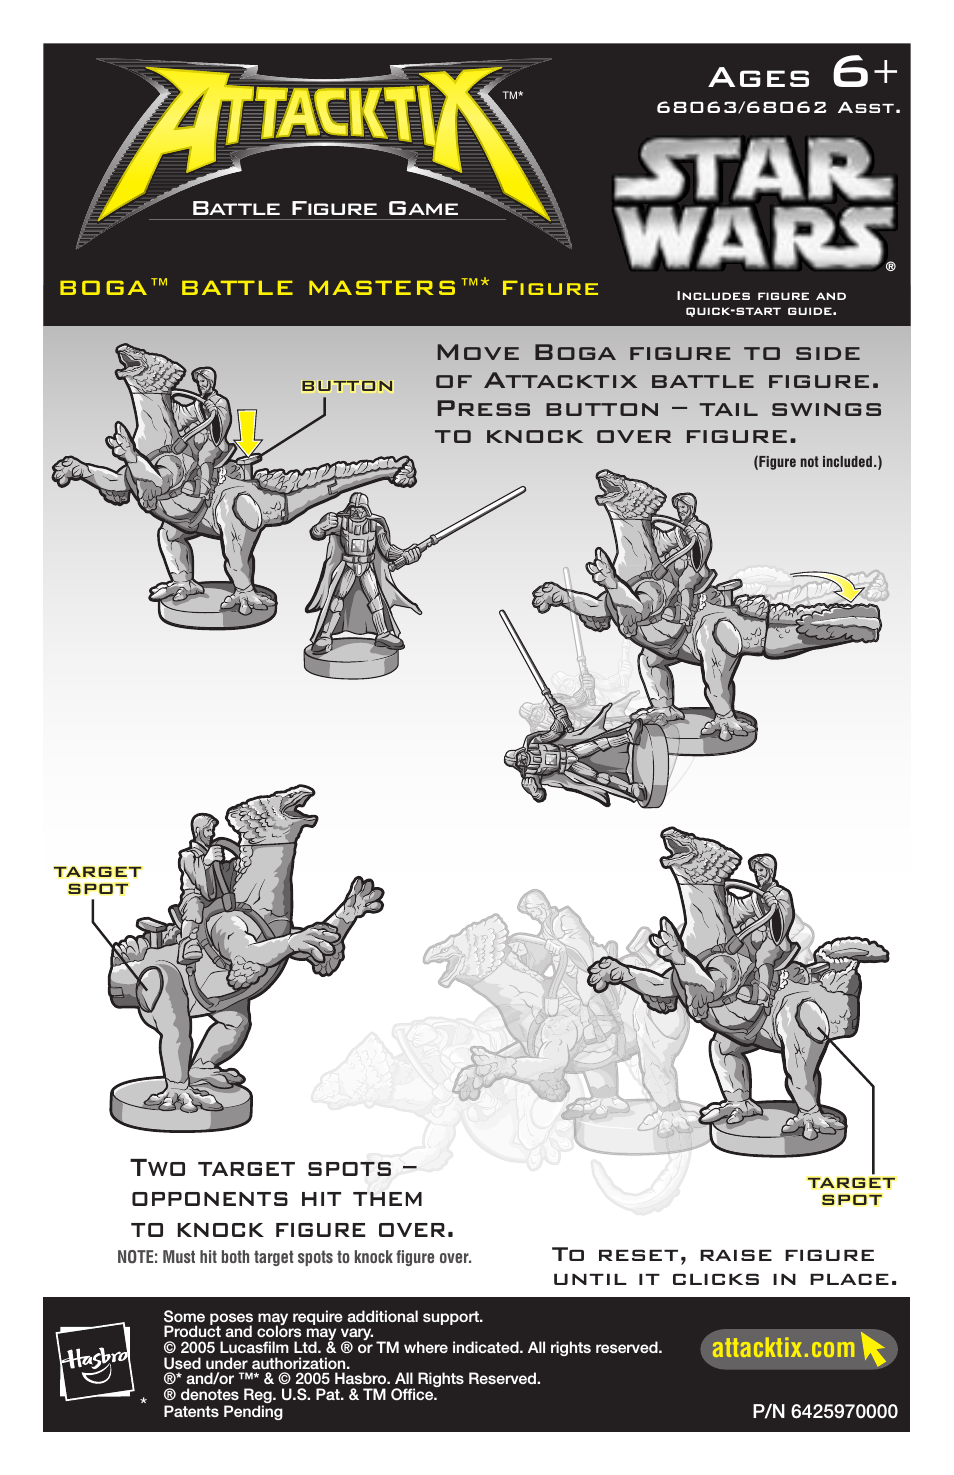 Attacktix Battle Figure Game 68063